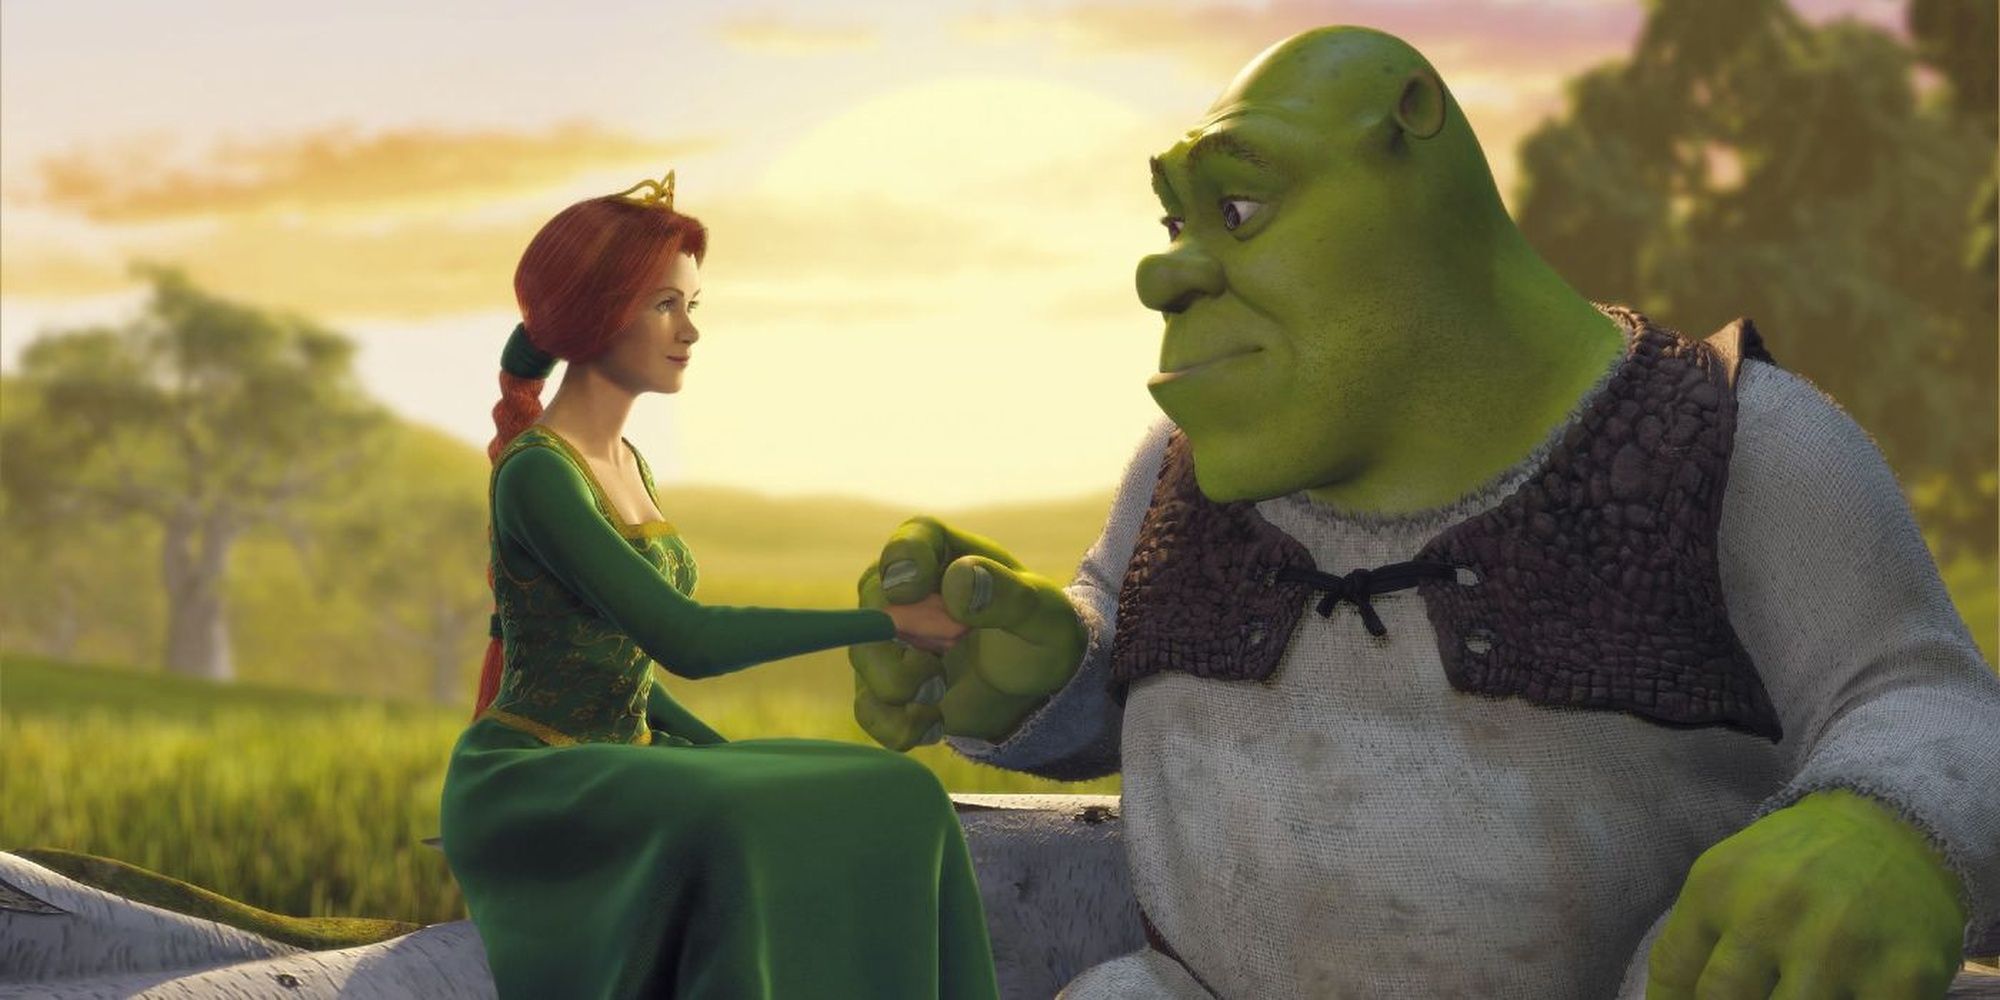 Shrek et Fiona dans le premier film de Shrek